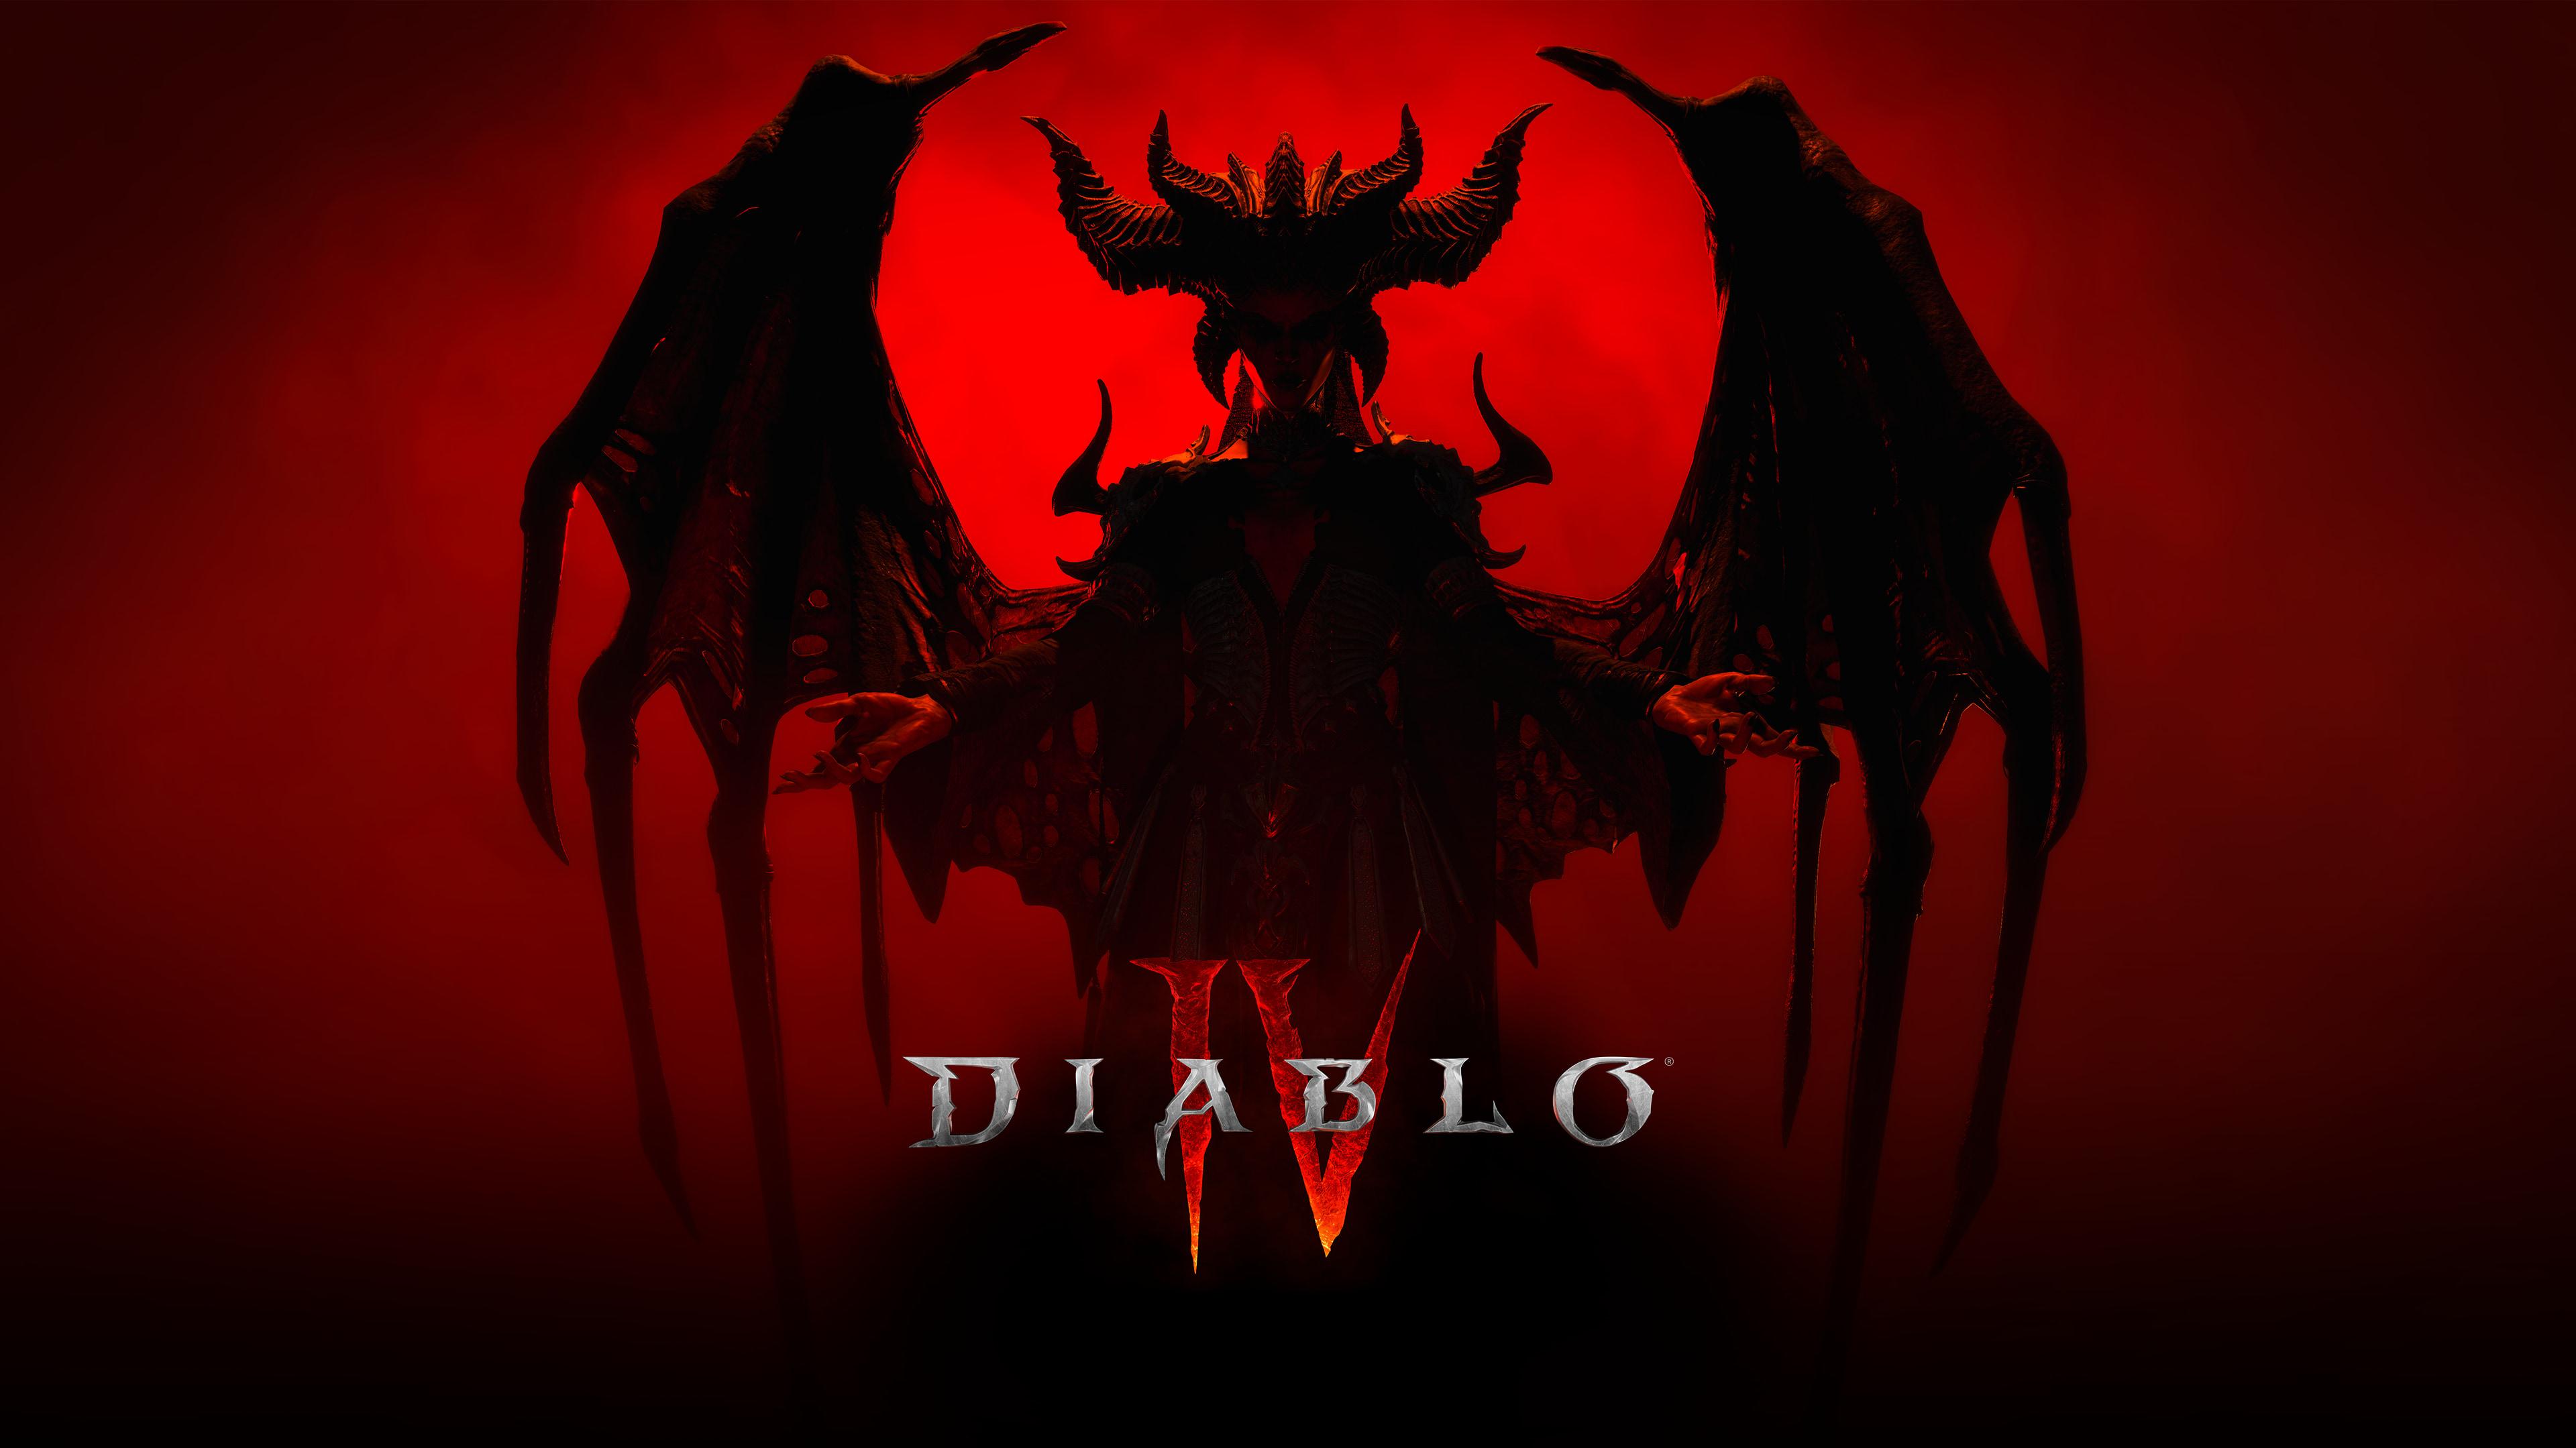 Diablo Iv Lilith 4k Wallpaper High Quality